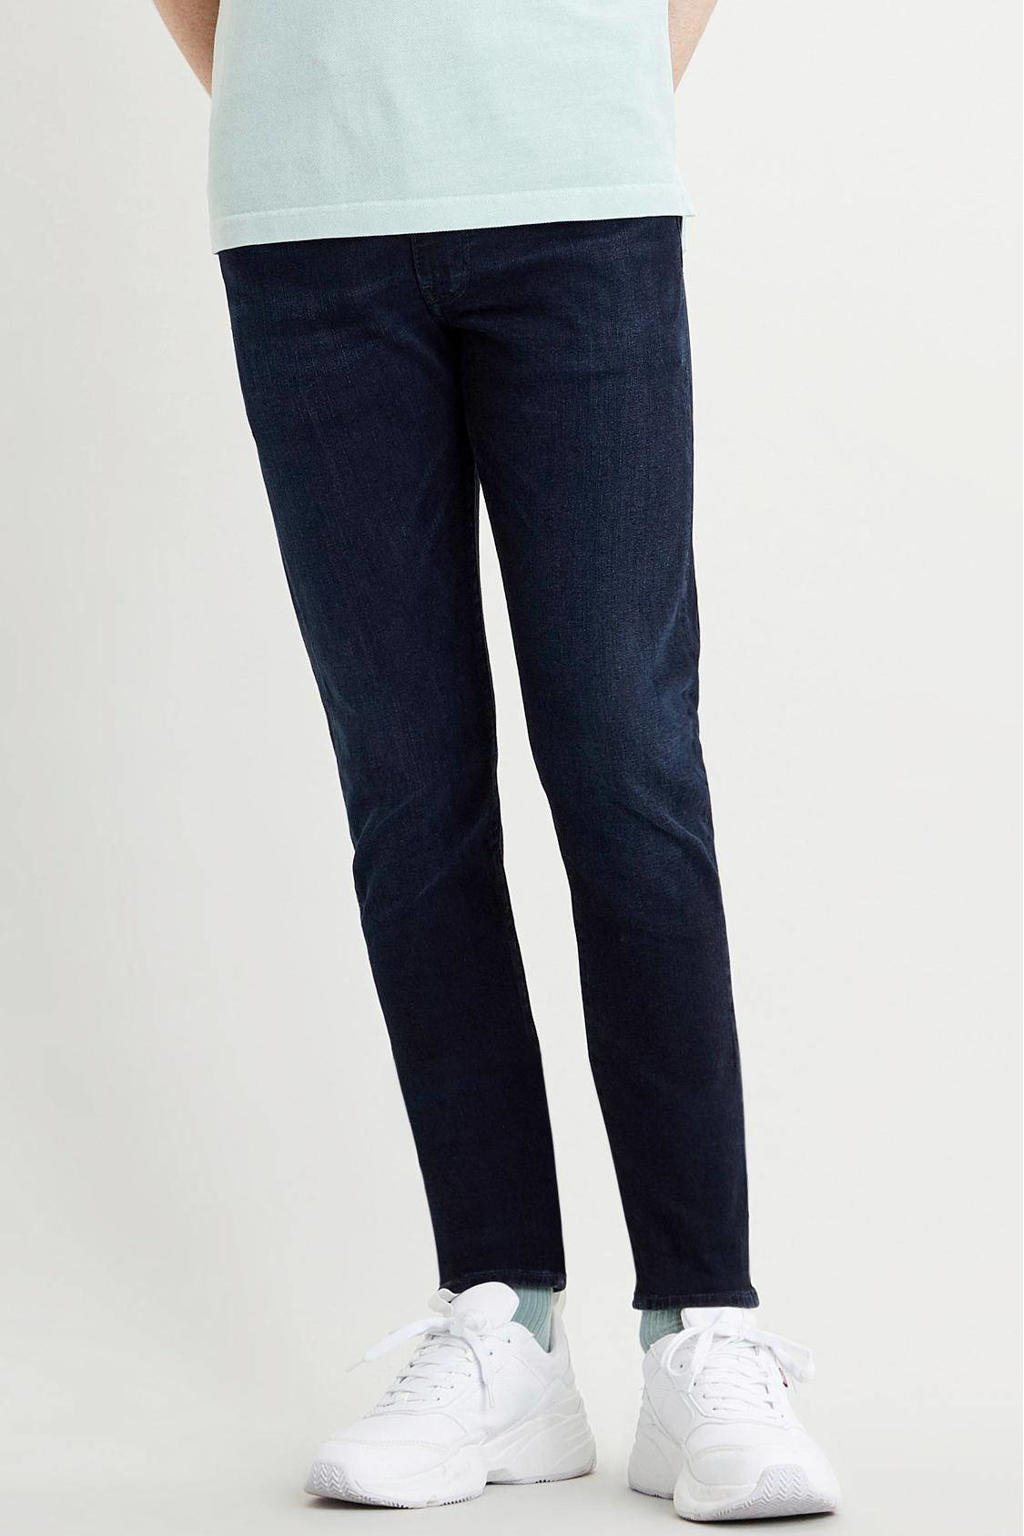 Levi's 519 skinny taper jeans blueridge